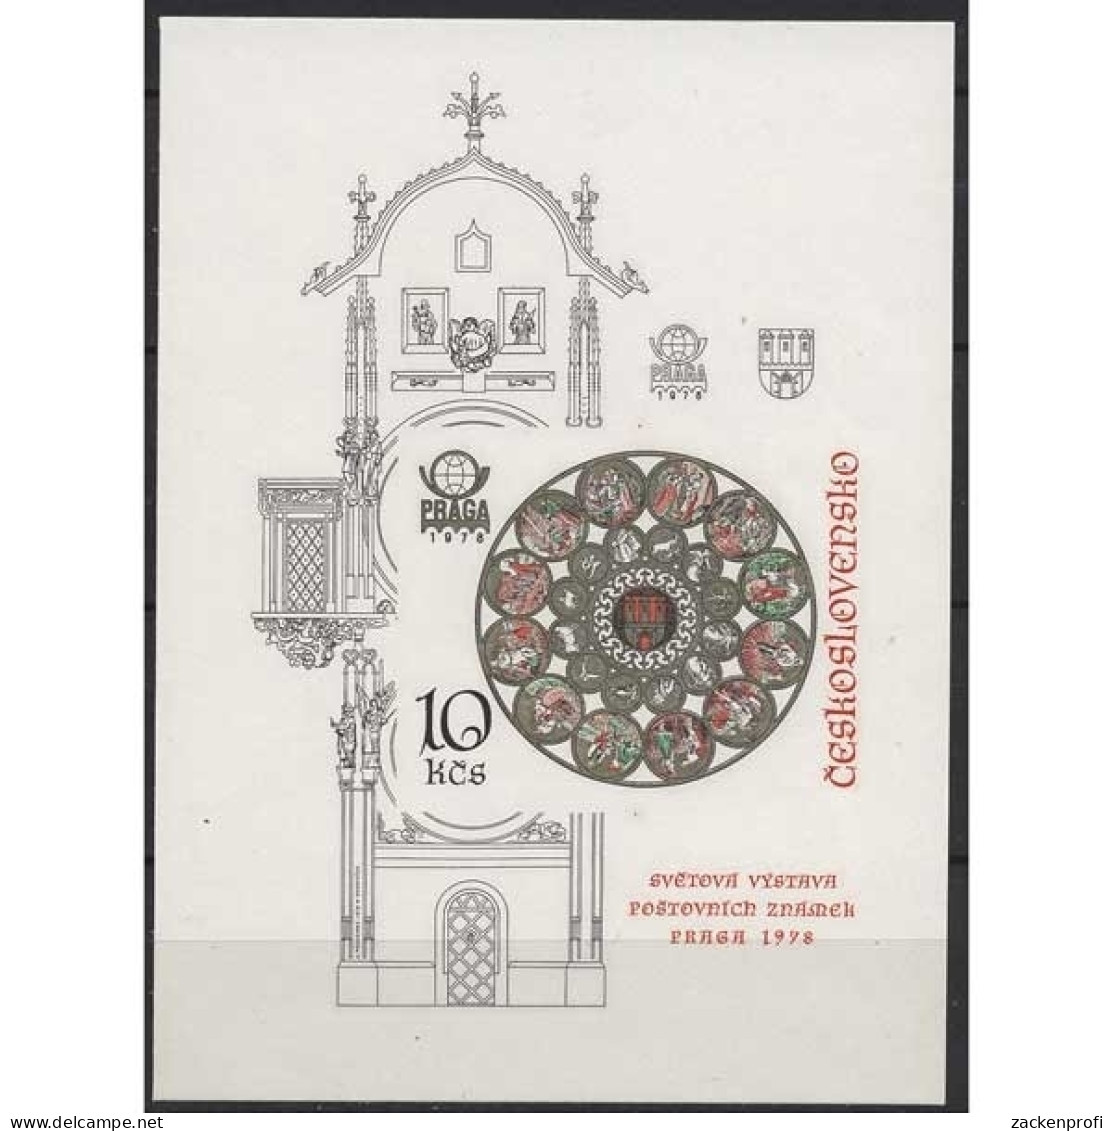 Tschechoslowakei 1978 PRAGA'78 Kalendarium Wappen Block 35 B Postfrisch (C91807) - Blocks & Sheetlets